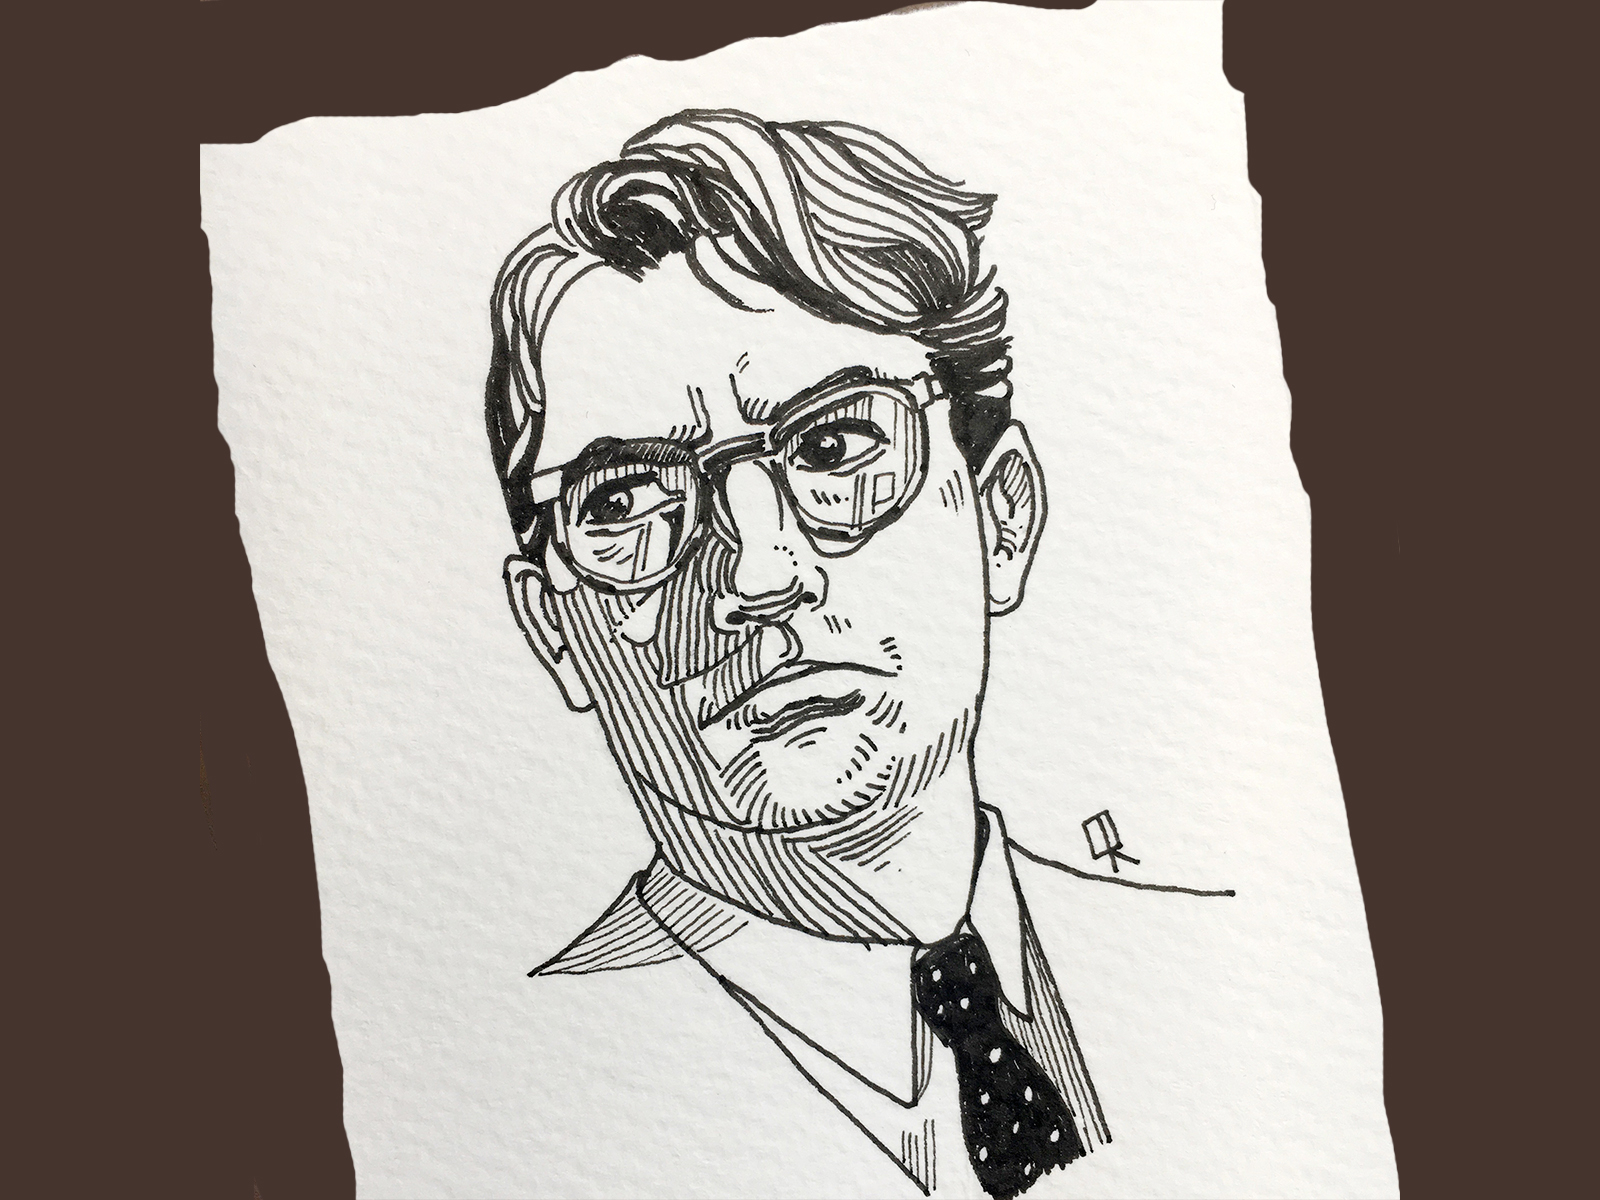 Atticus Finch by Qamar Ramzan on Dribbble